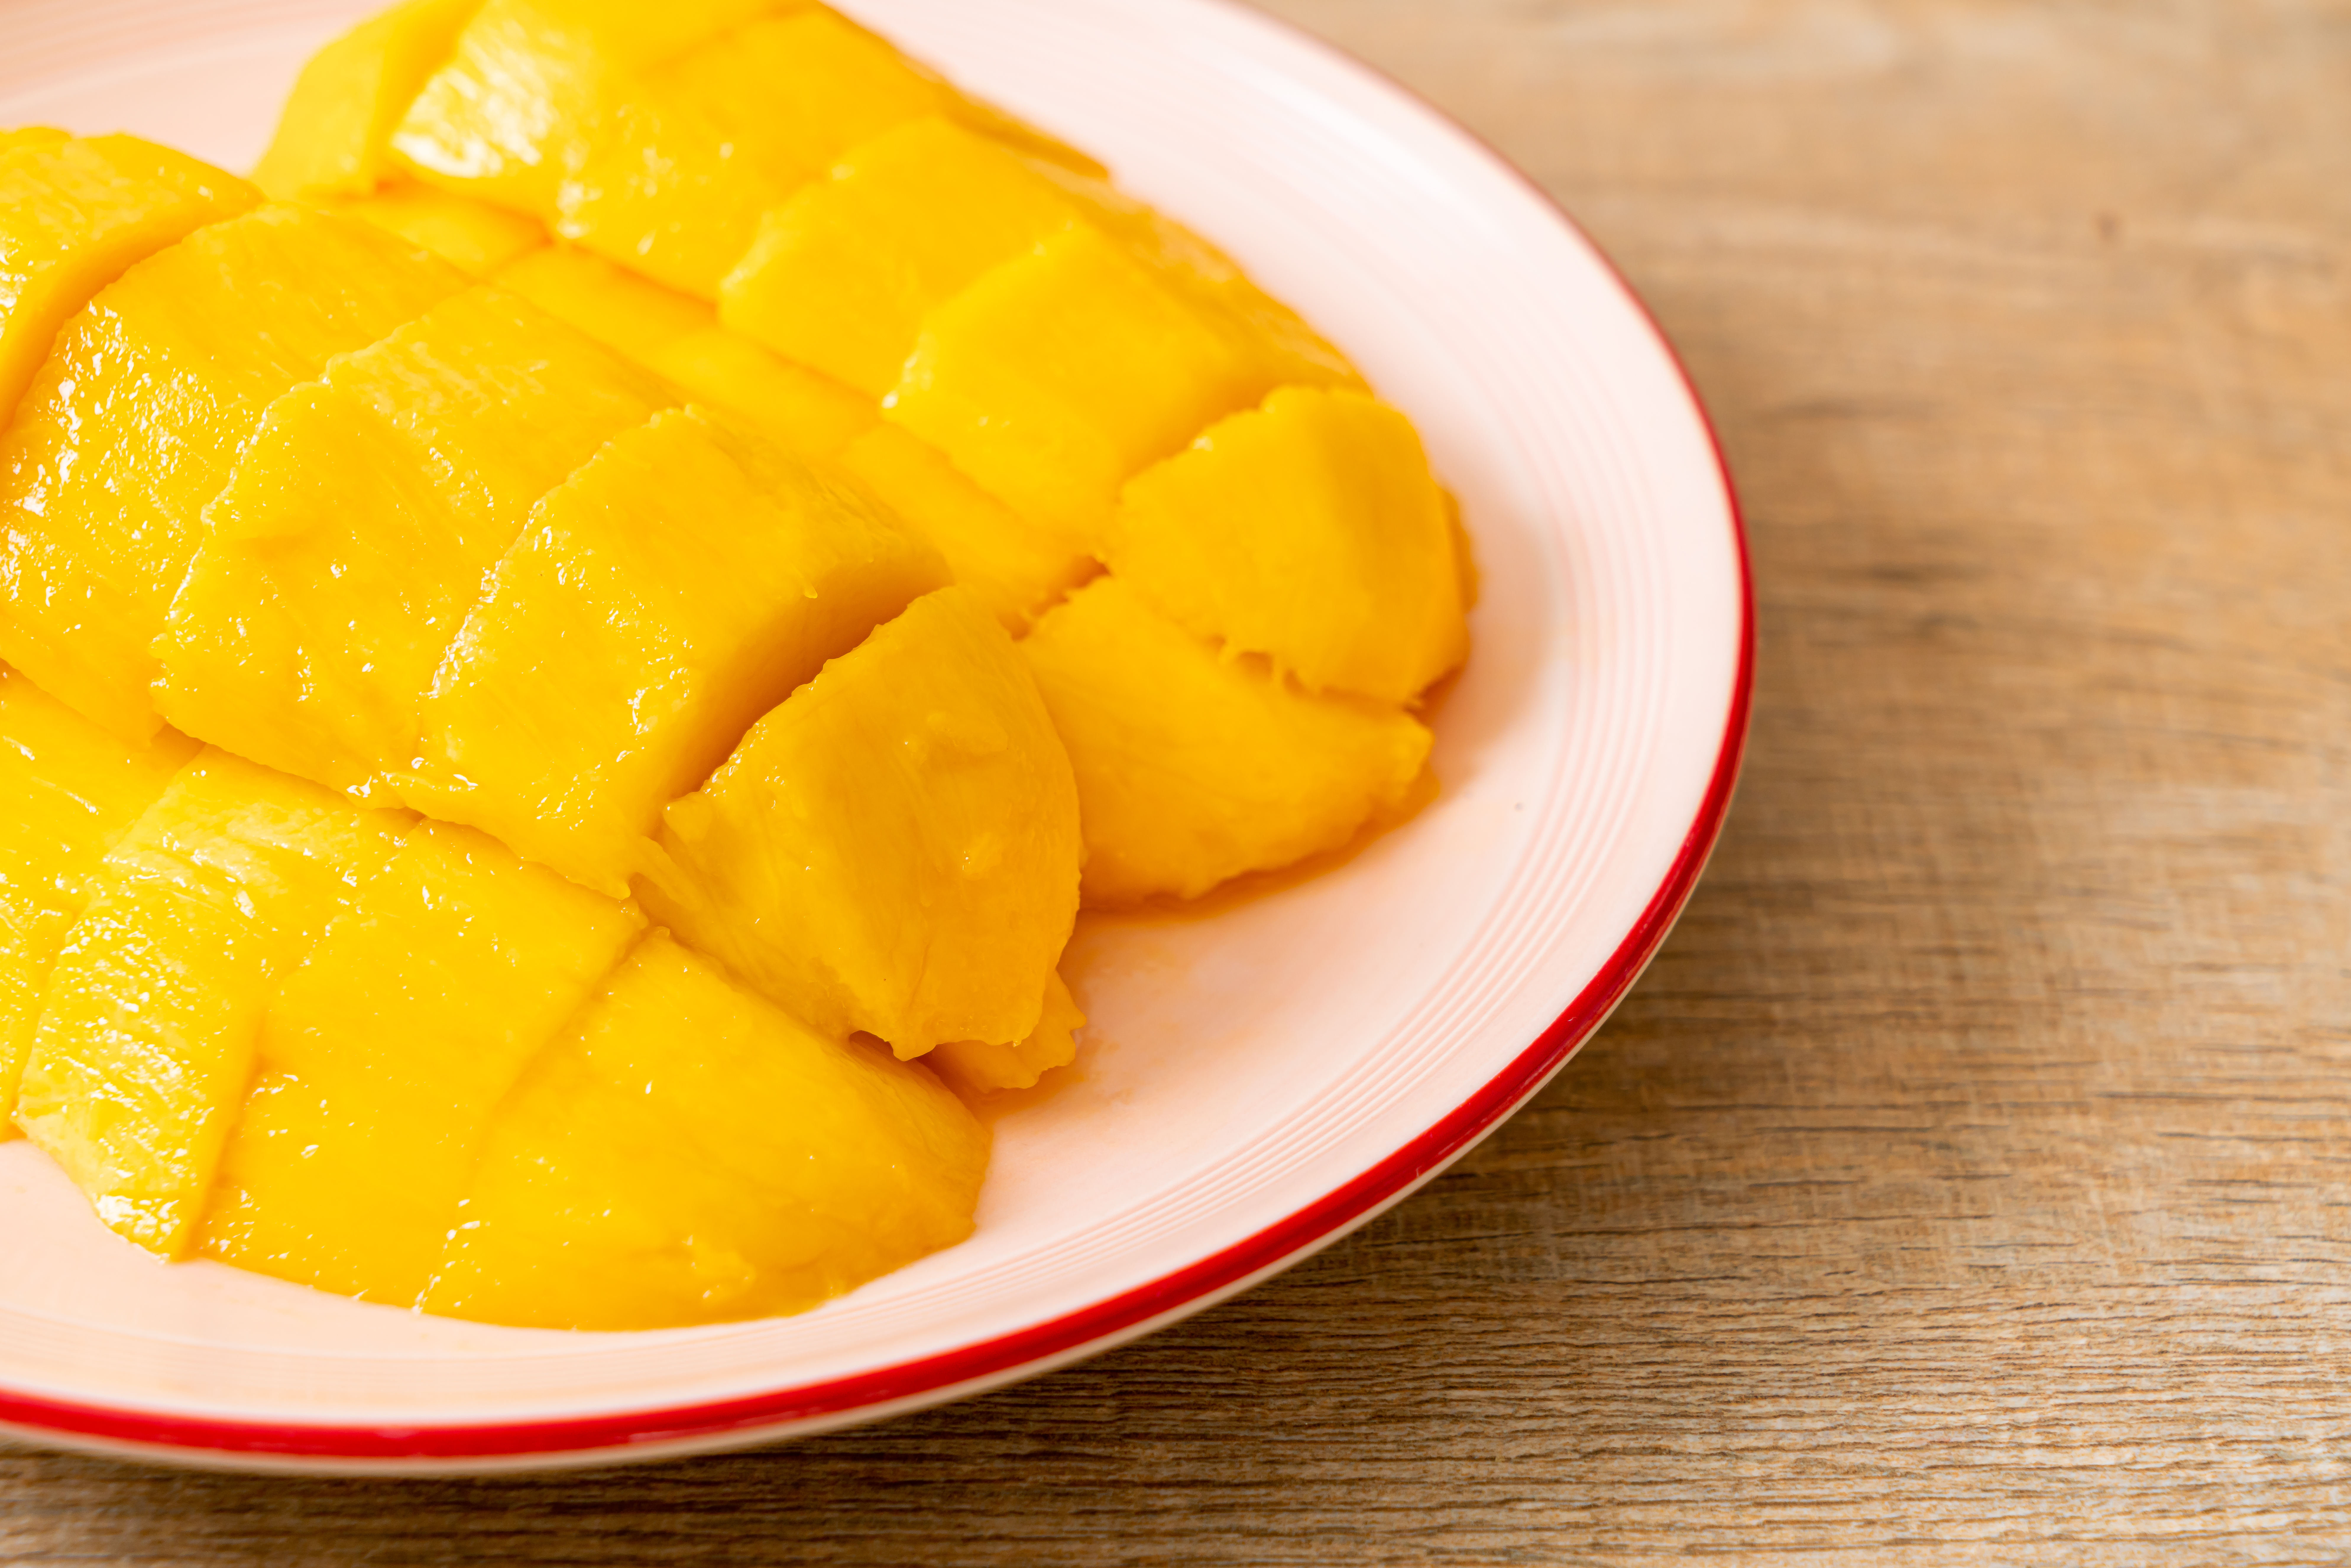 Obrane i pokrojone mango na talerzu